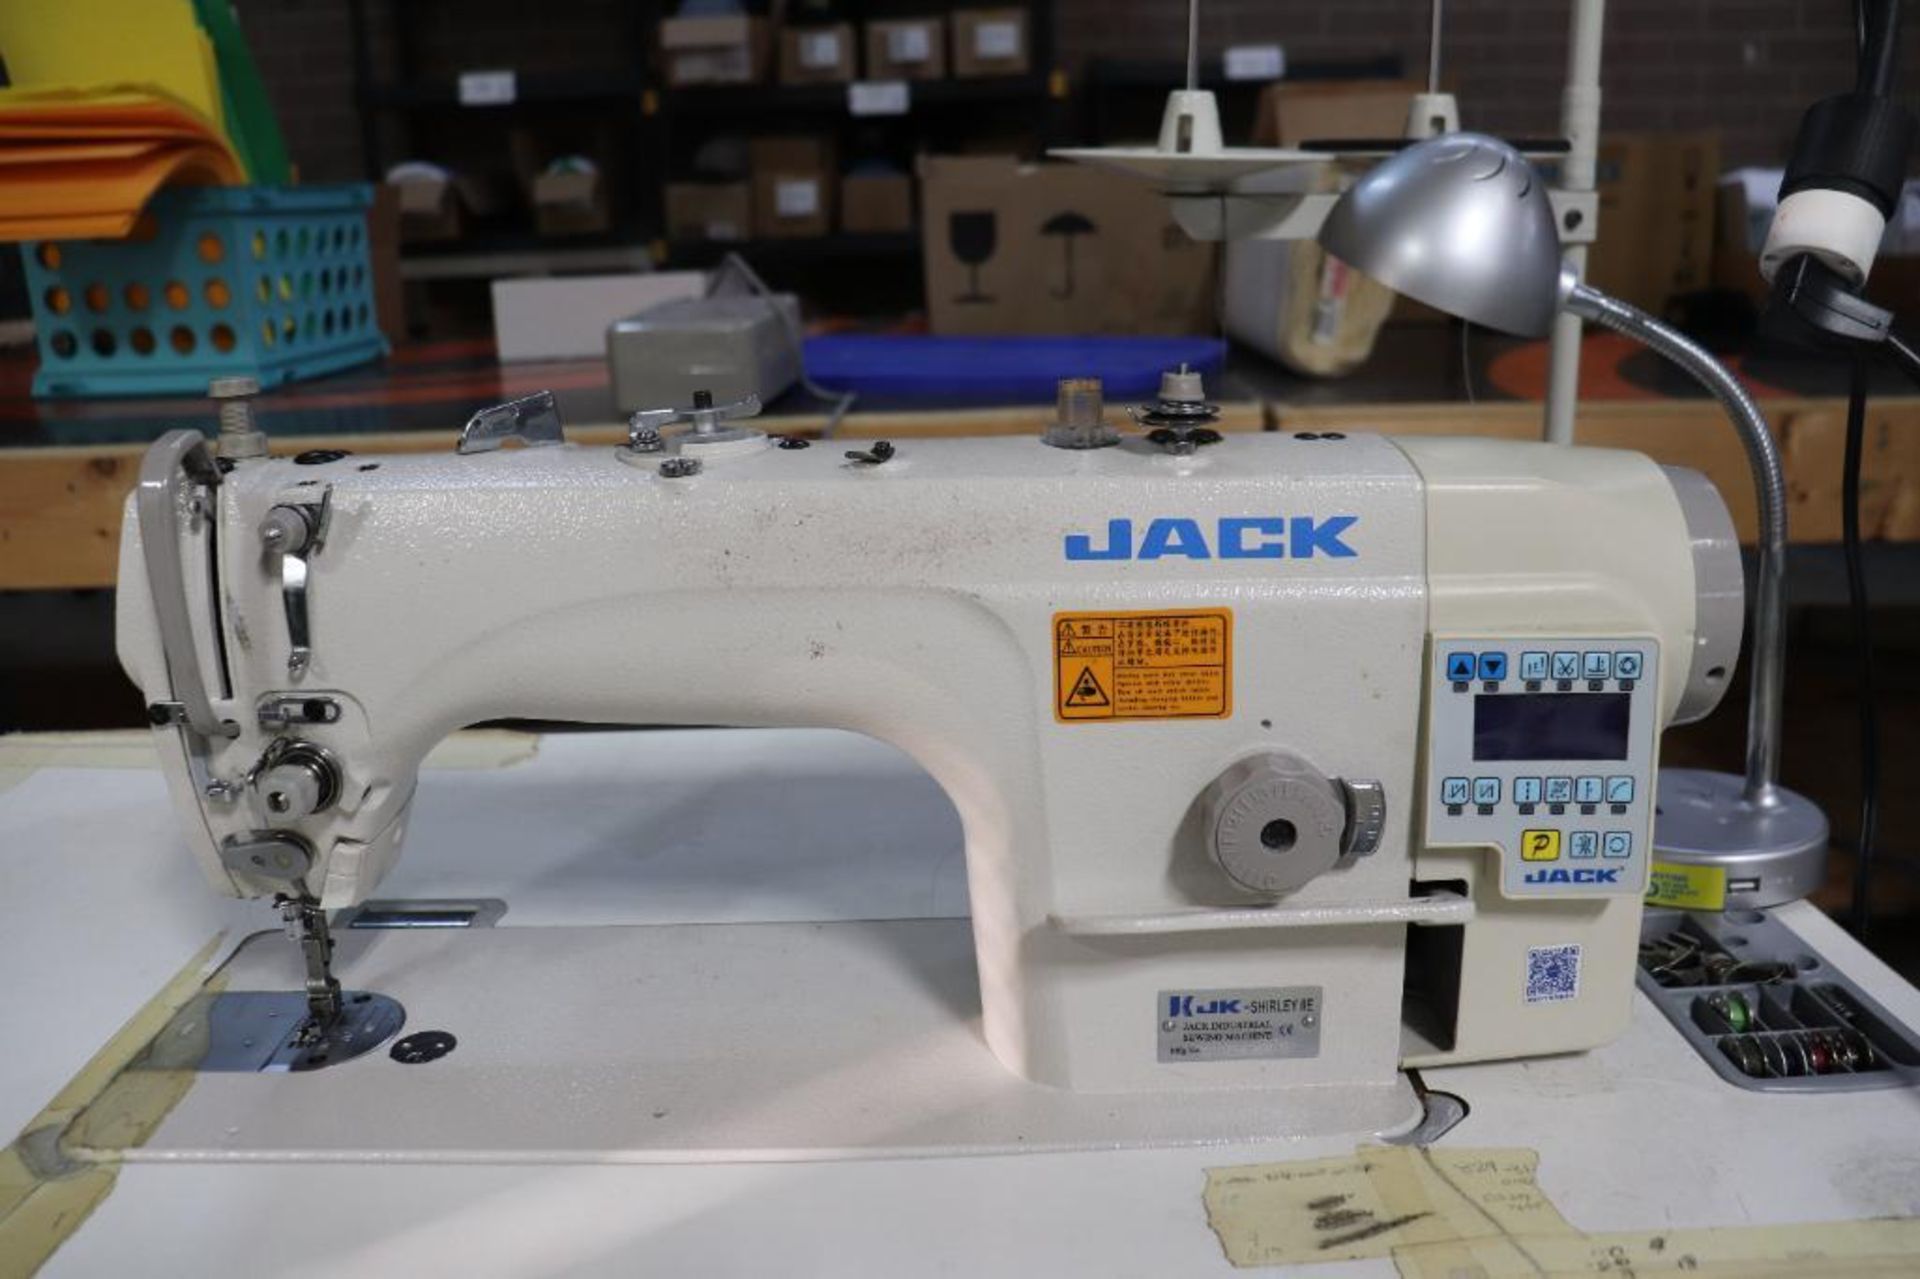 Jack JK-SHIRLEY IIE lockstitch sewing machine - Image 3 of 8